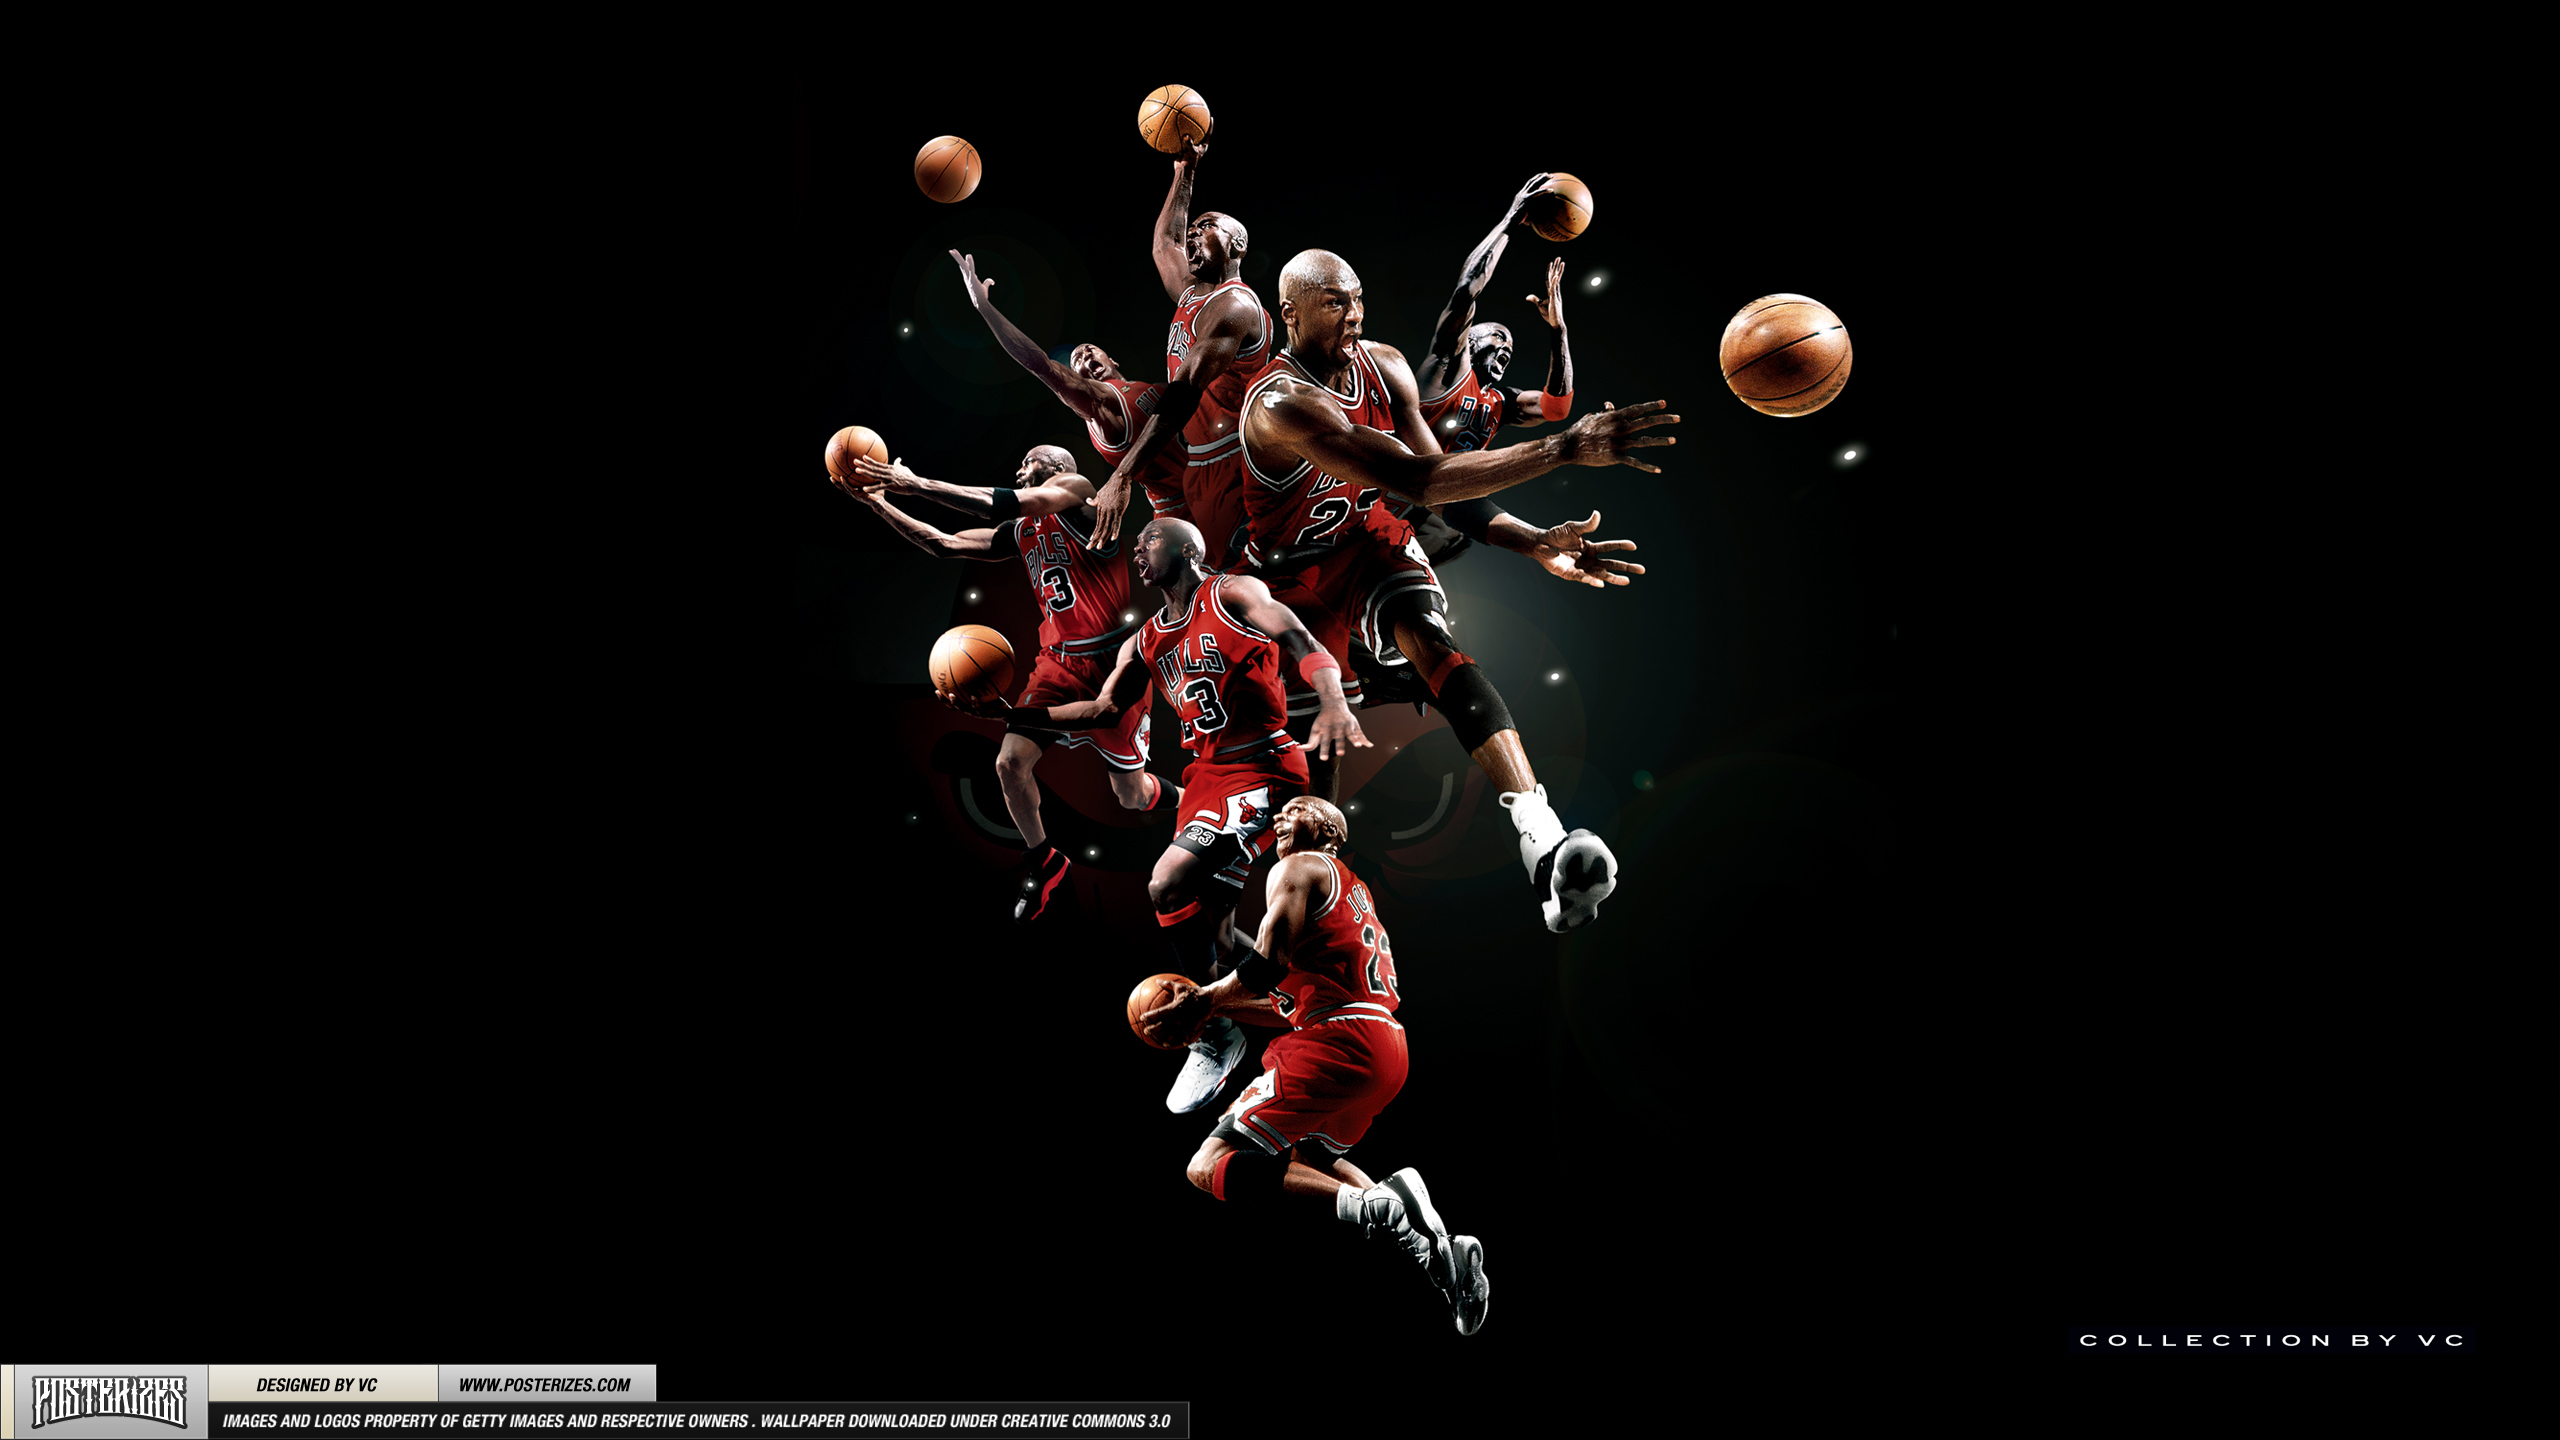 Michael Jordan Wallpaper High Resolution And Quality